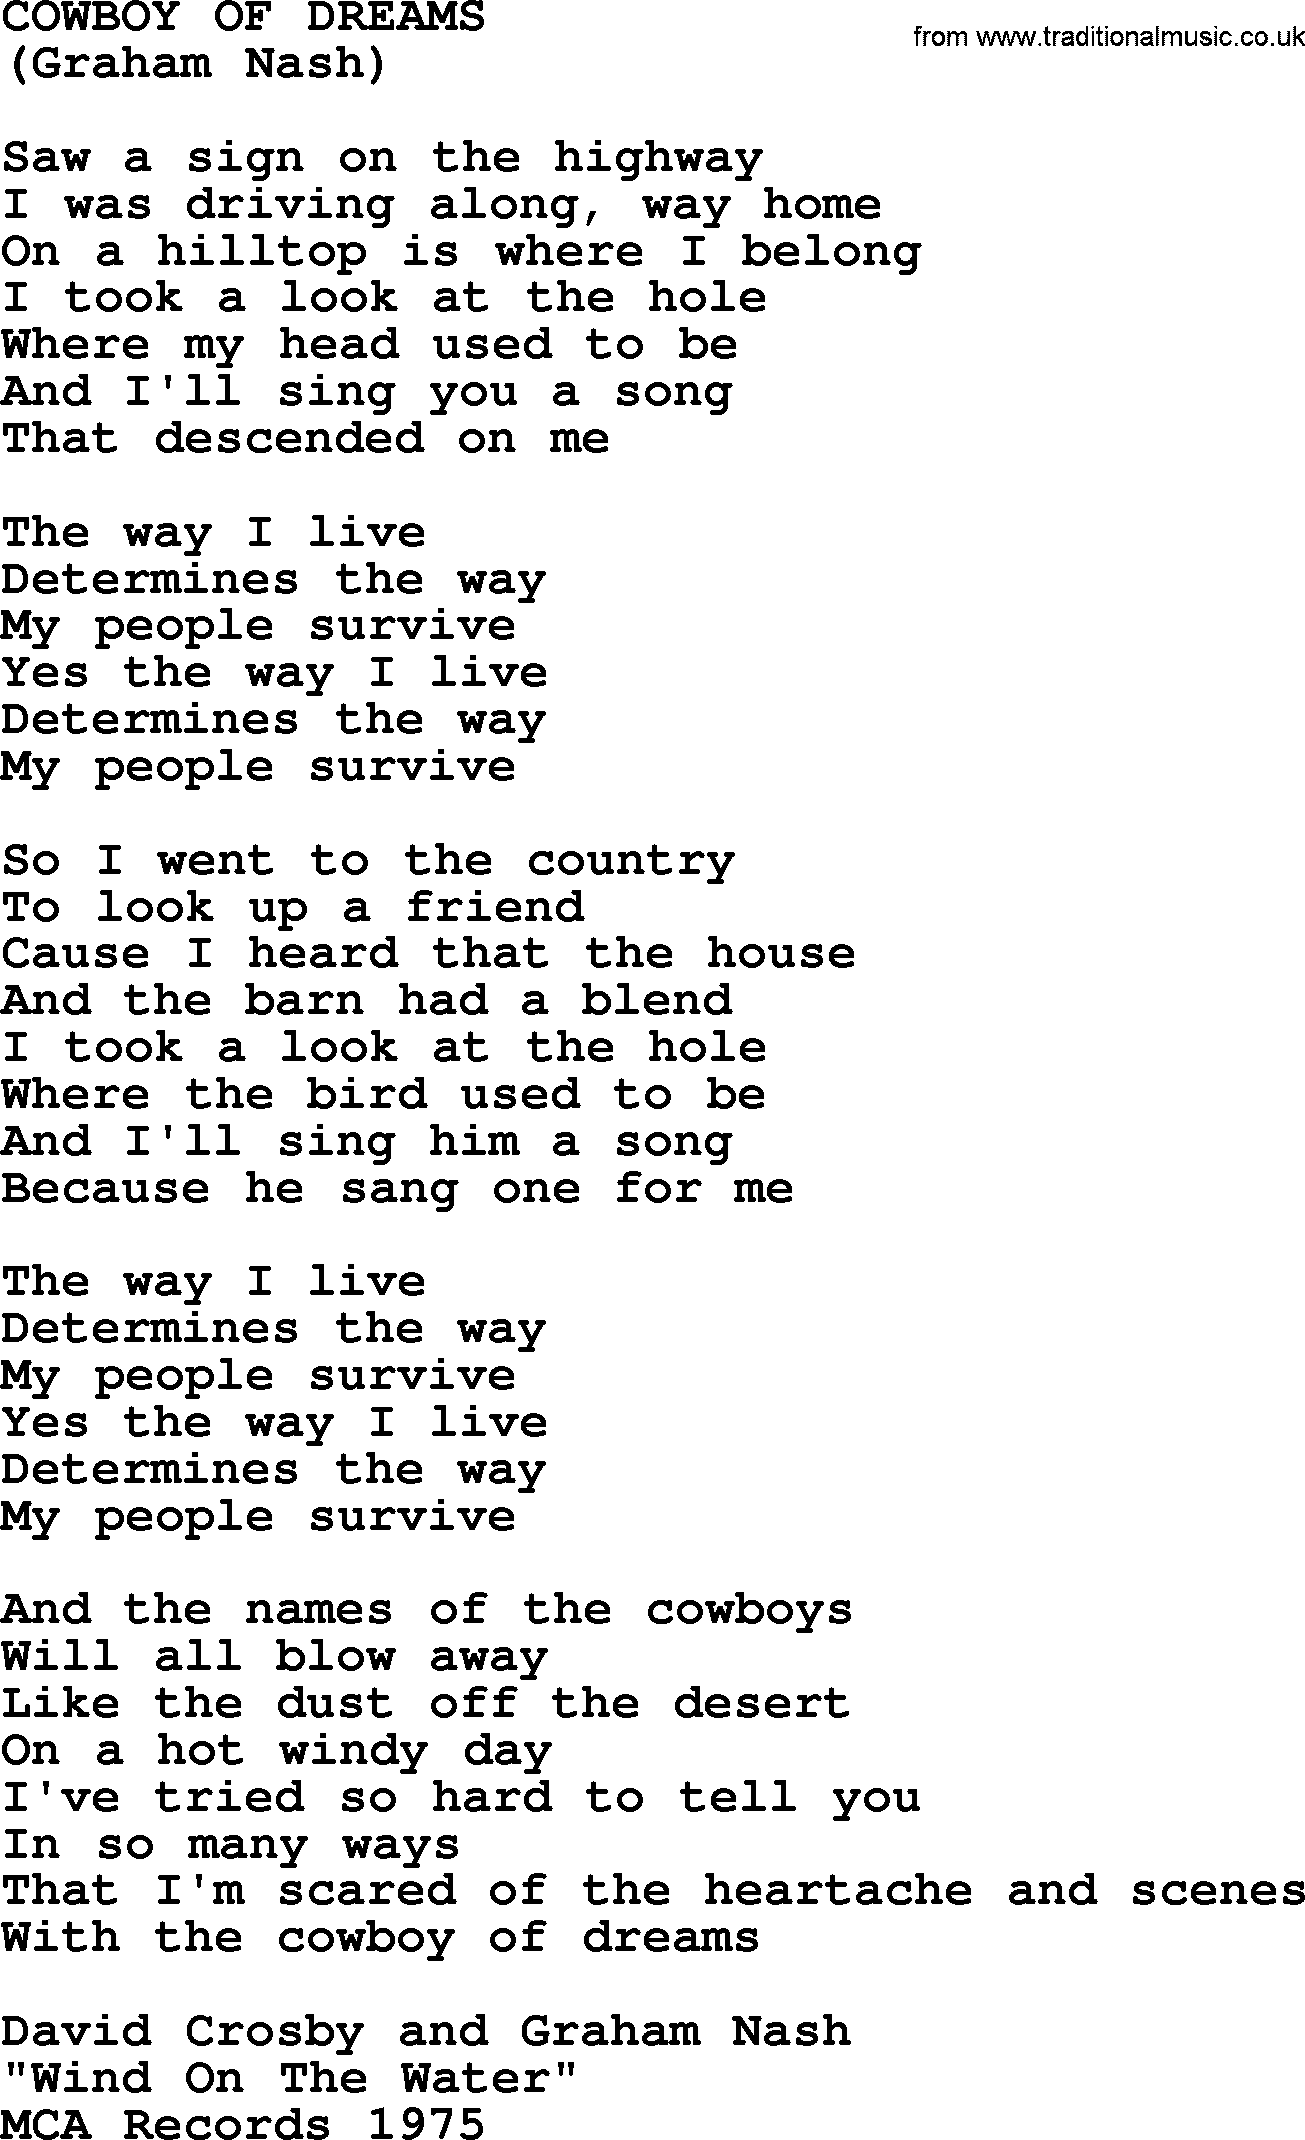 The Byrds song Cowboy Of Dreams, lyrics